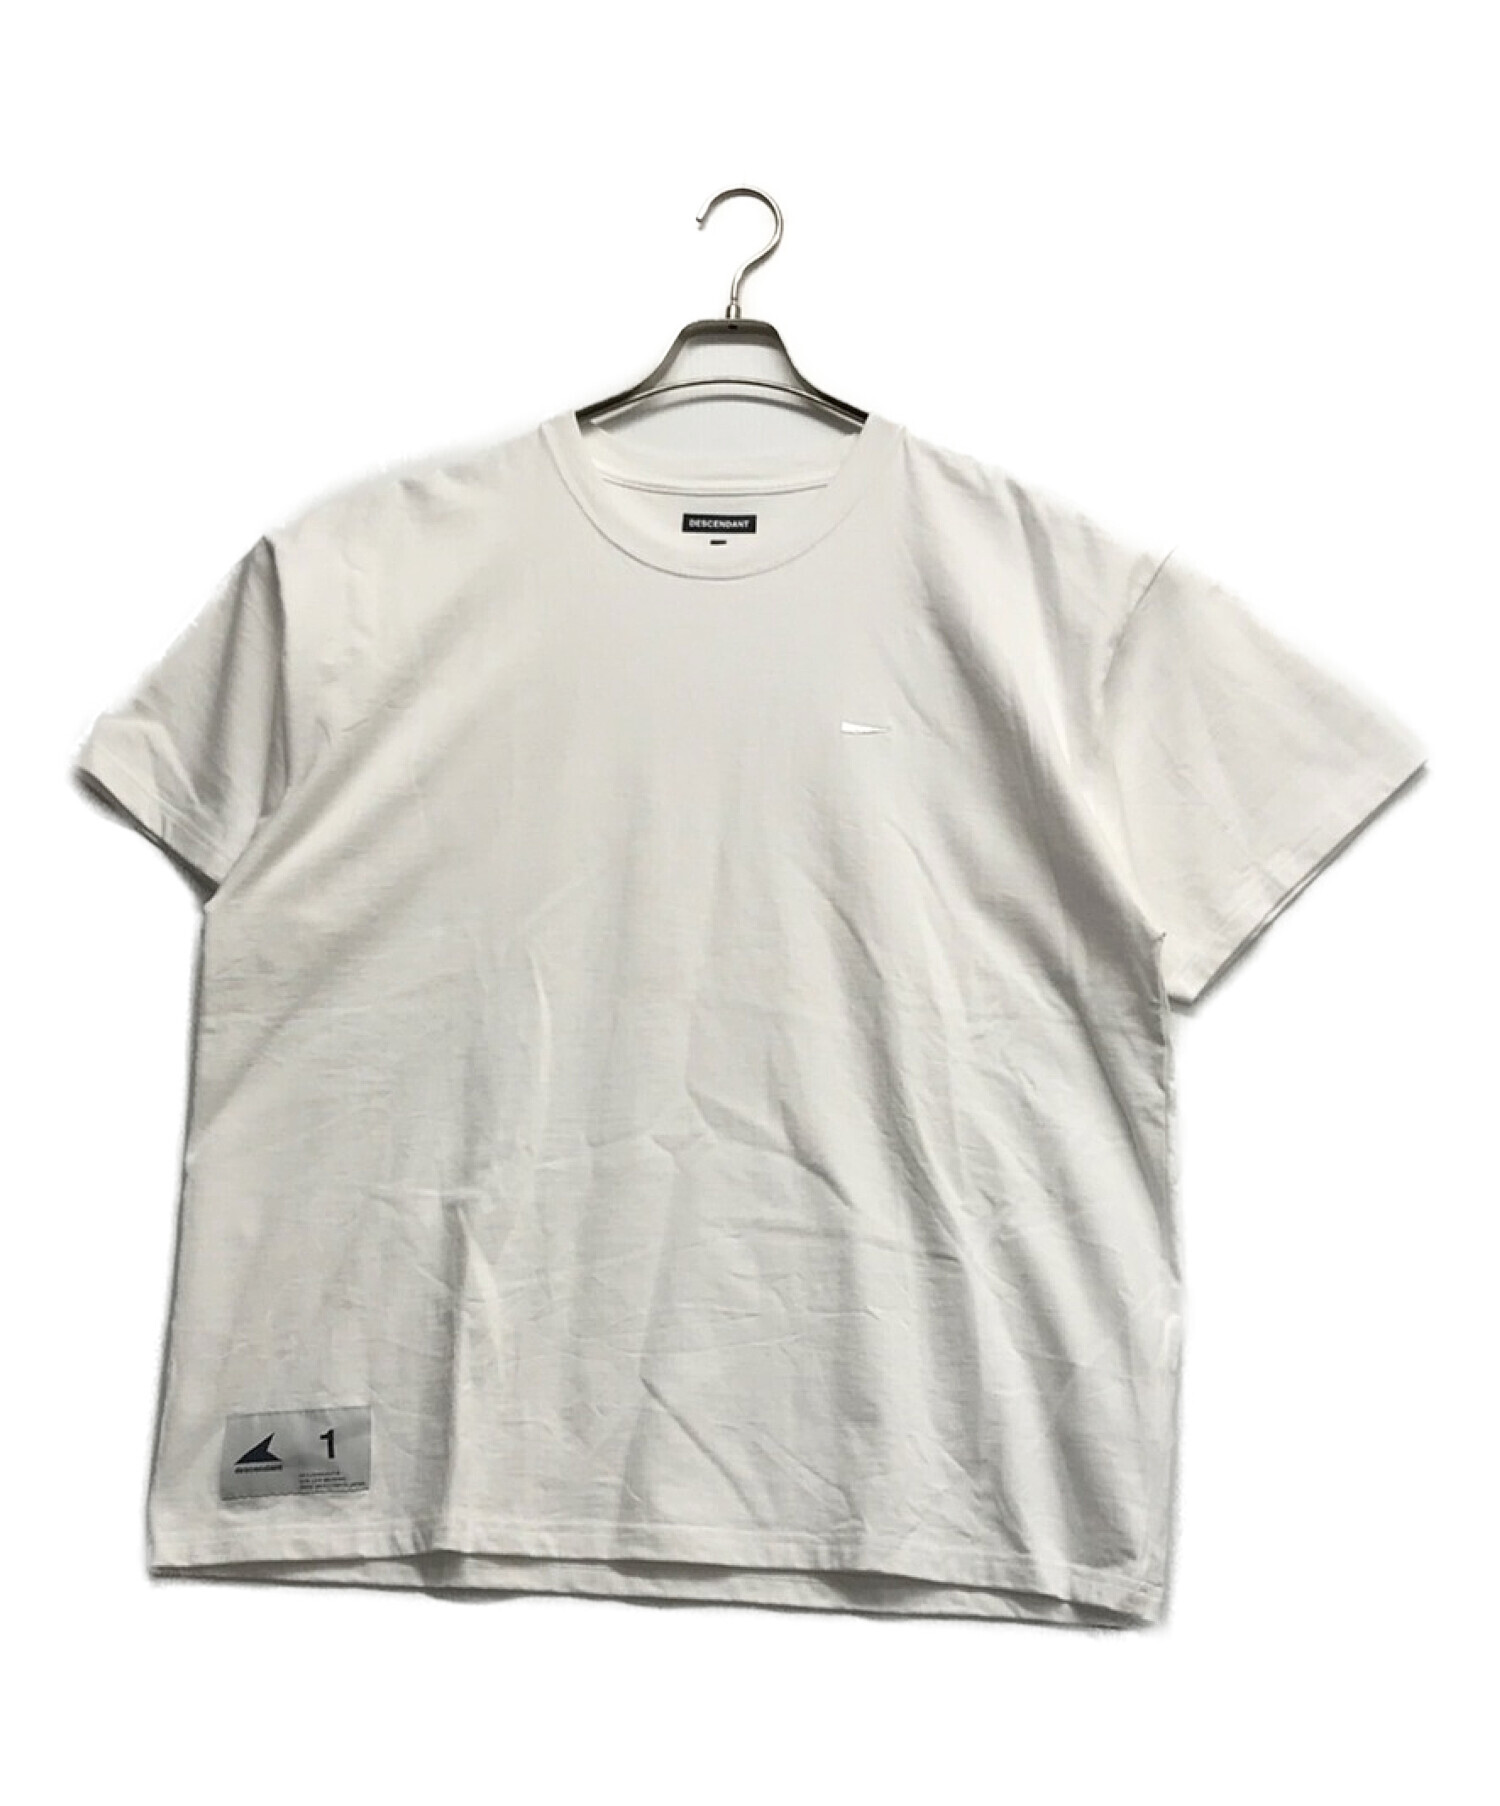 DESCENDANT (ディセンダント) ストリップクルーネックショートスリーブTシャツ ホワイト サイズ:1